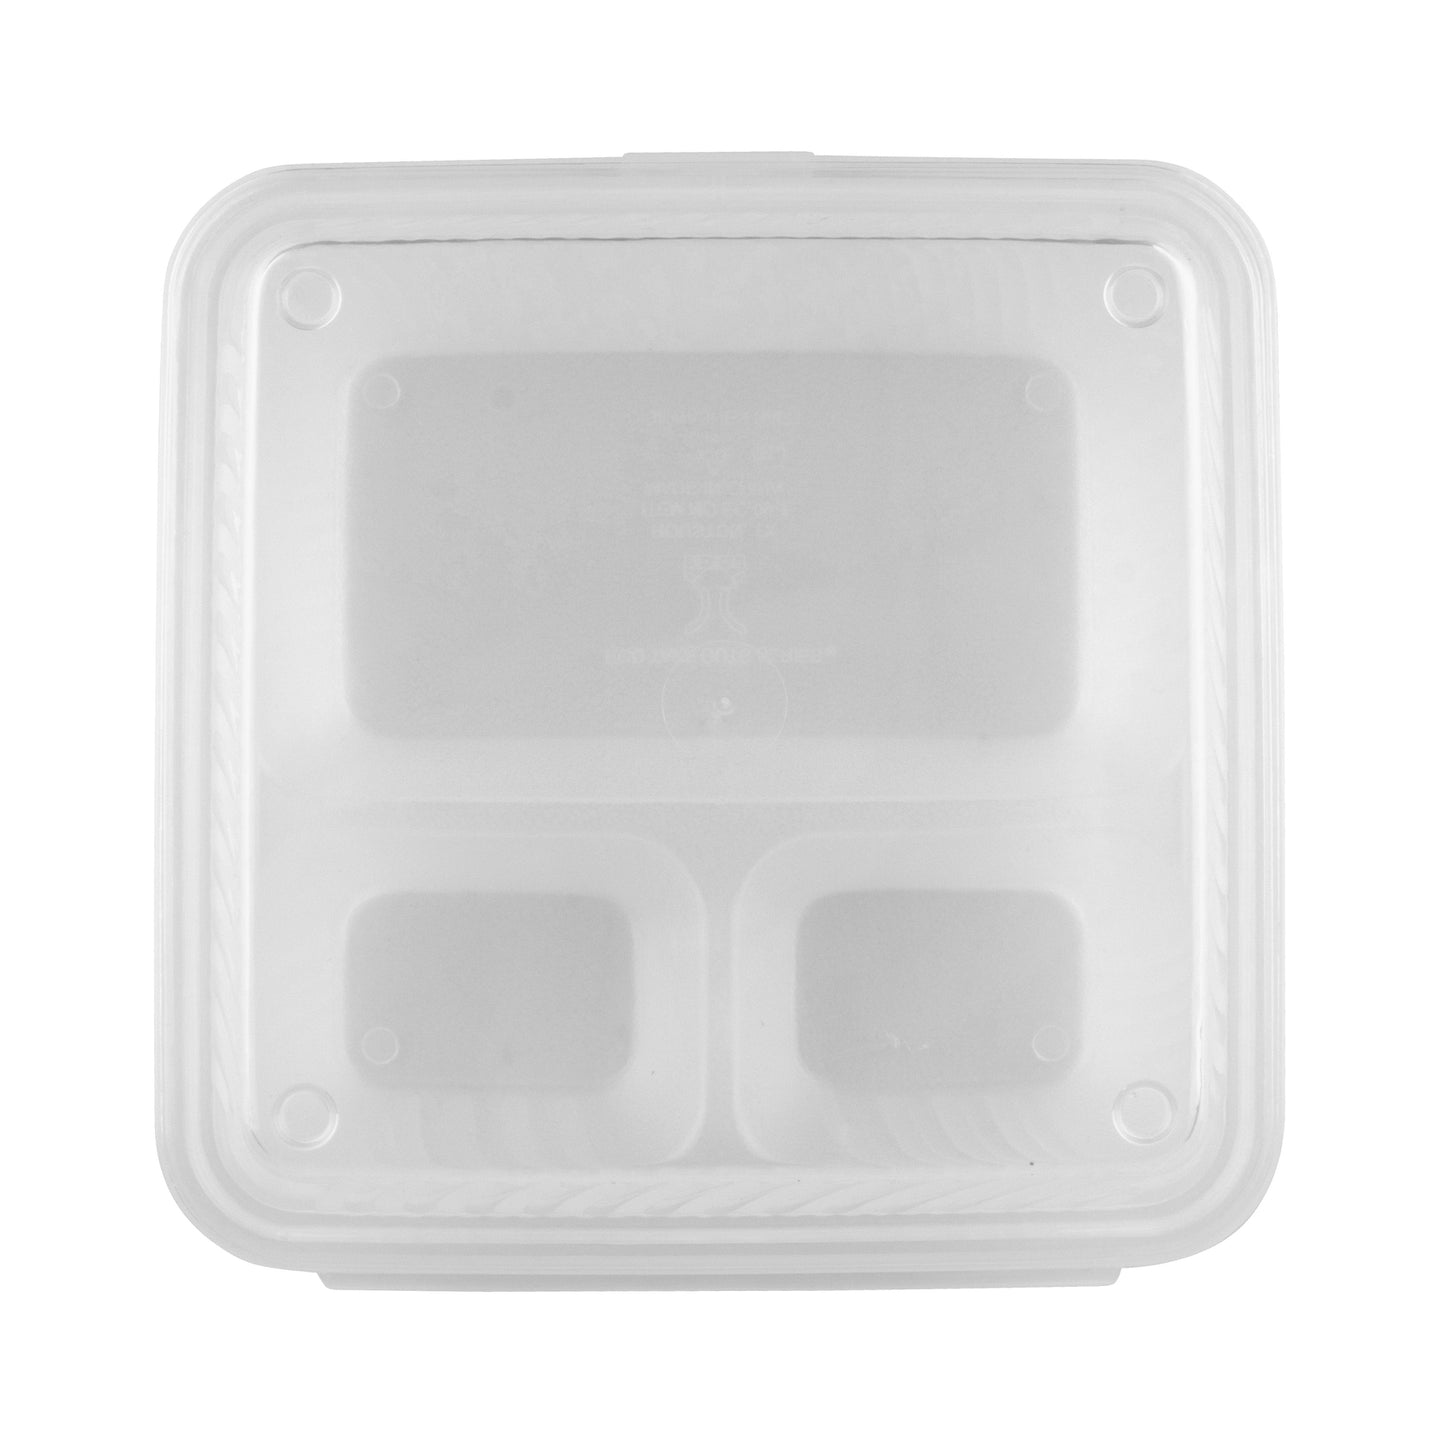 9" x 9" 3-Compartmant Food Container, 3.5" Deep (Set of 4 ea.)